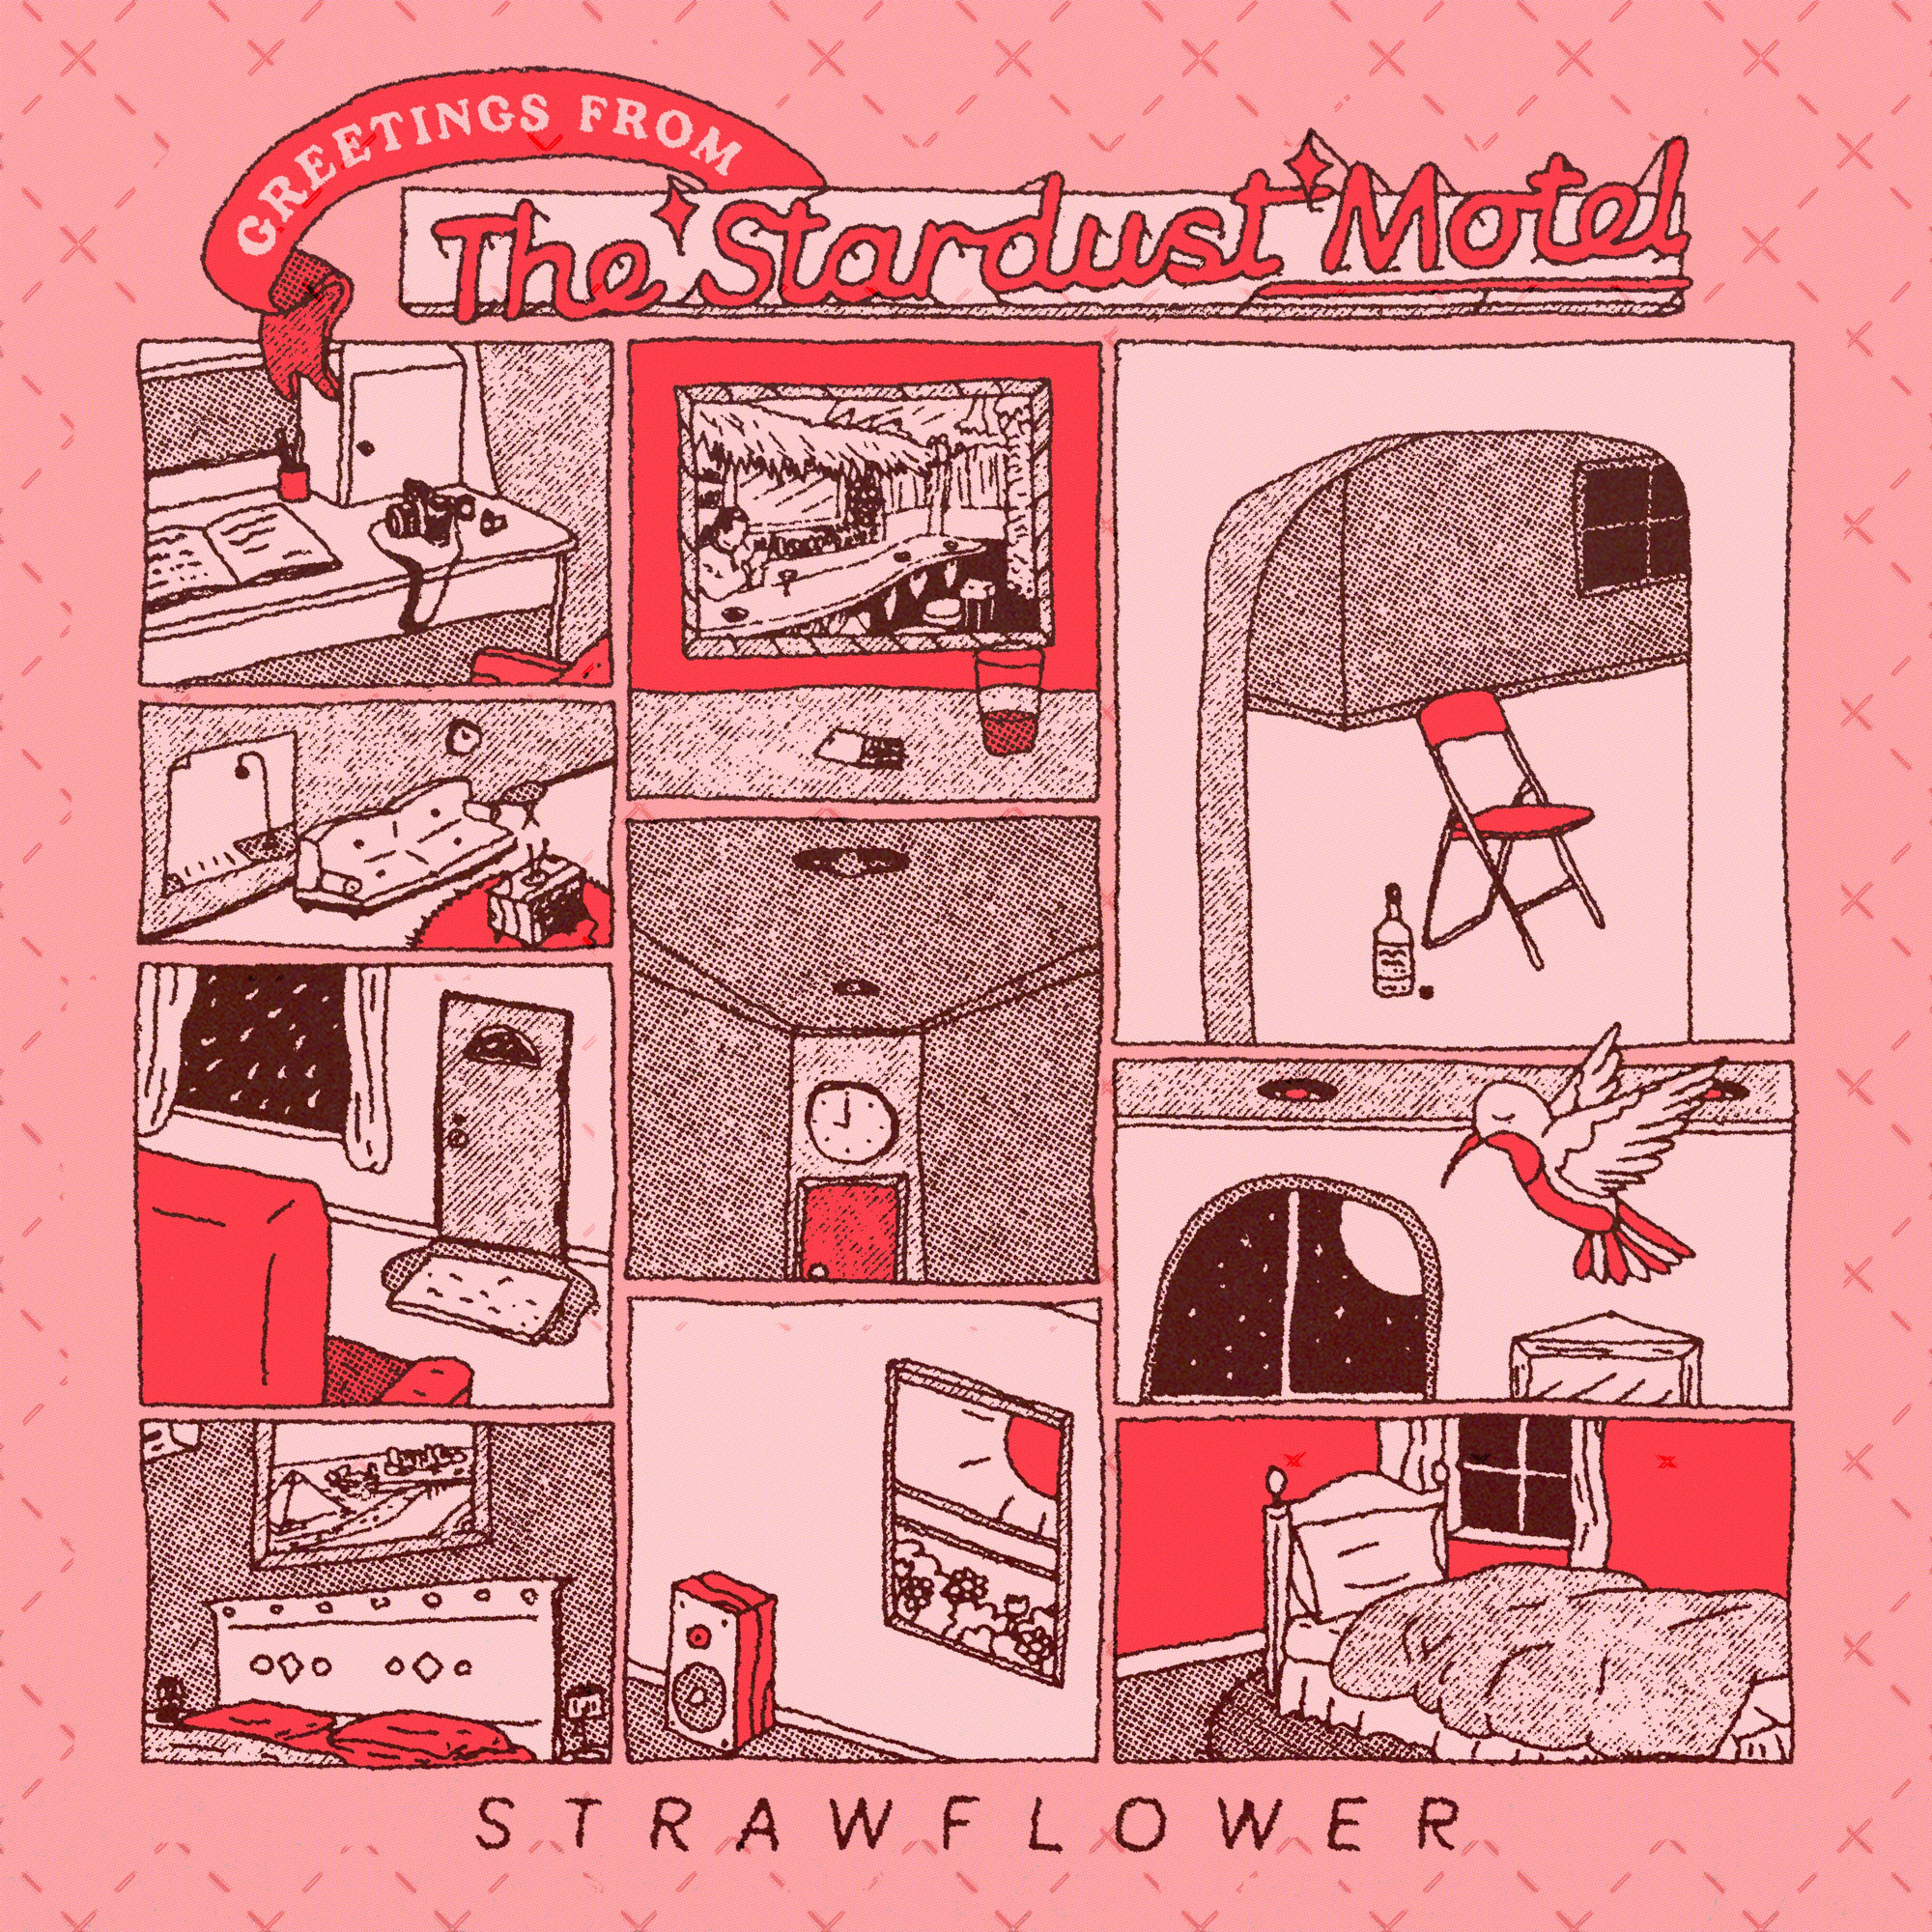  Explorando Sonidos en “Greetings from the Stardust Motel” de Strawflower